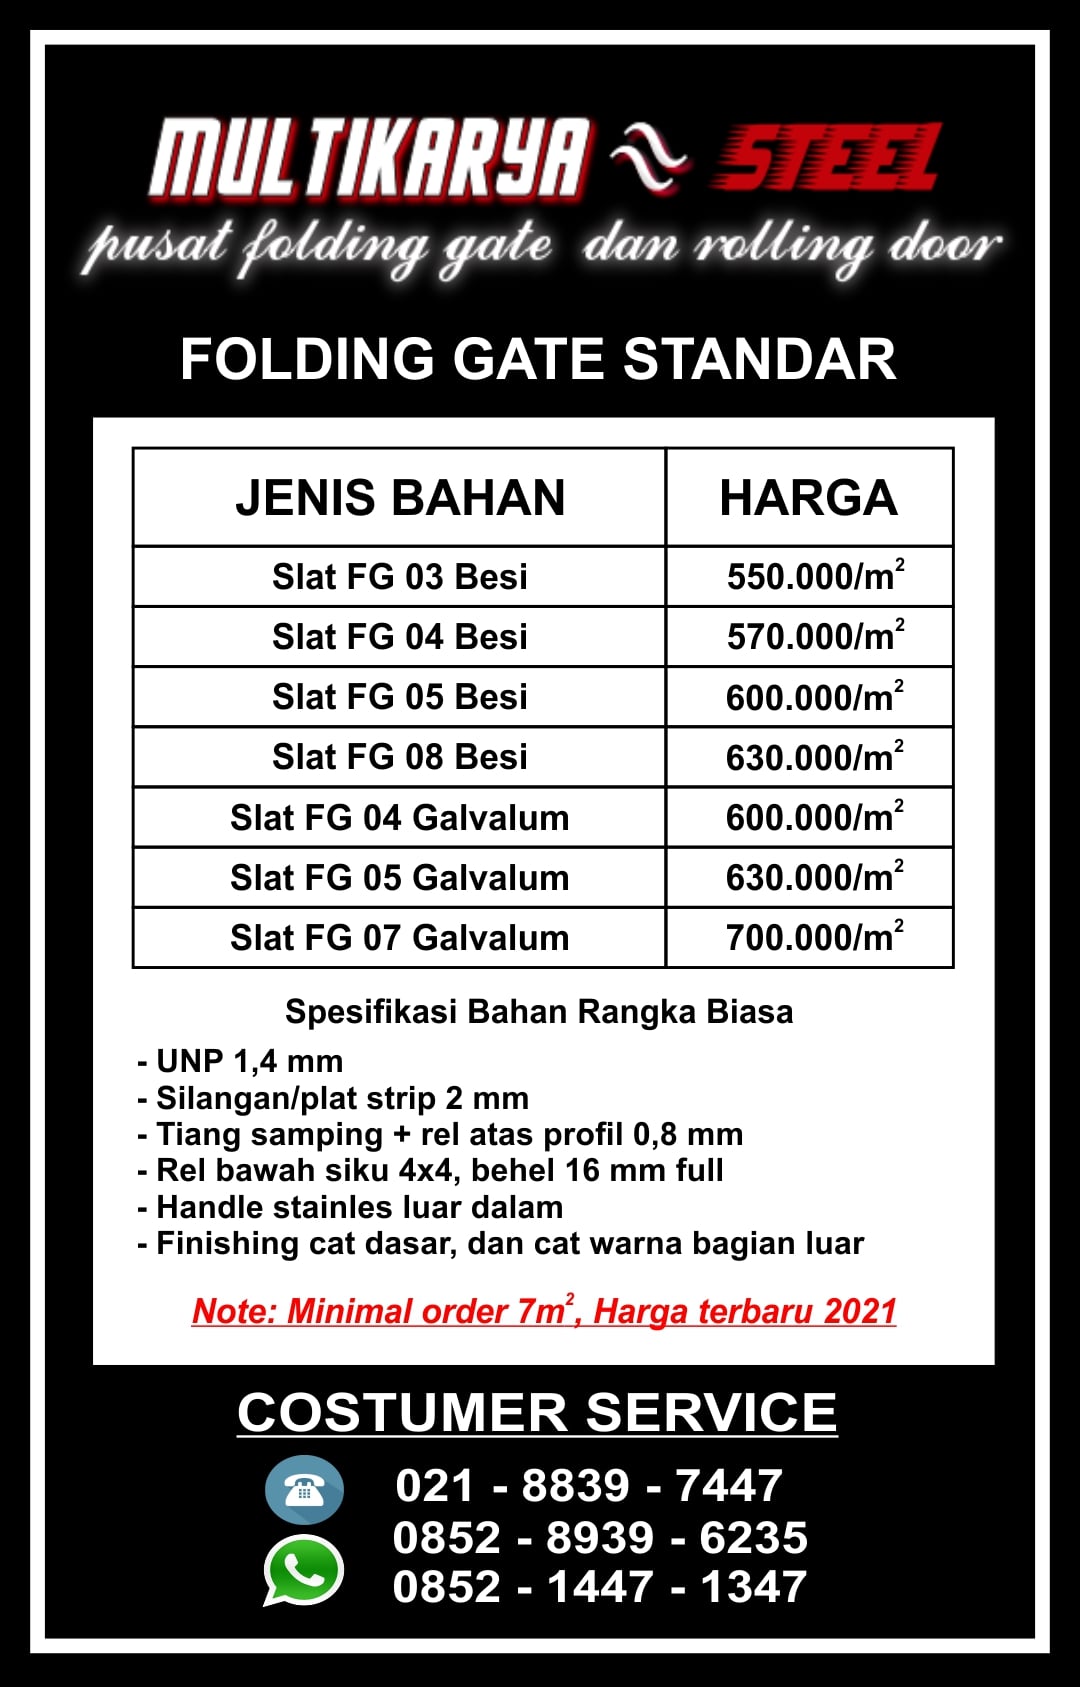 Daftar Harga Folding Gate Medan Satria Murah Multi Karya Steel